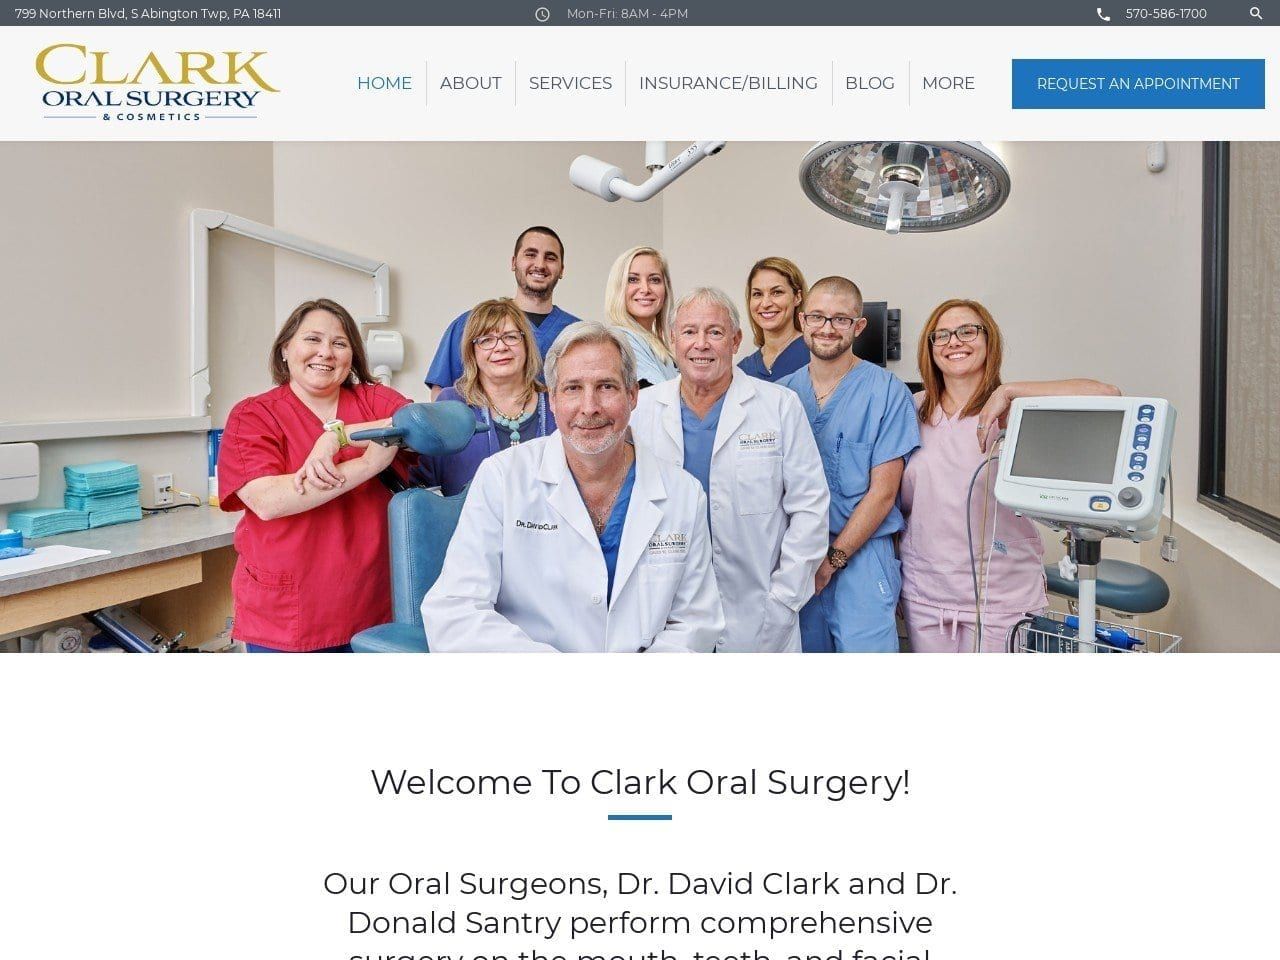 Clark Oral Surgery Website Screenshot from clarkoralsurgery.com